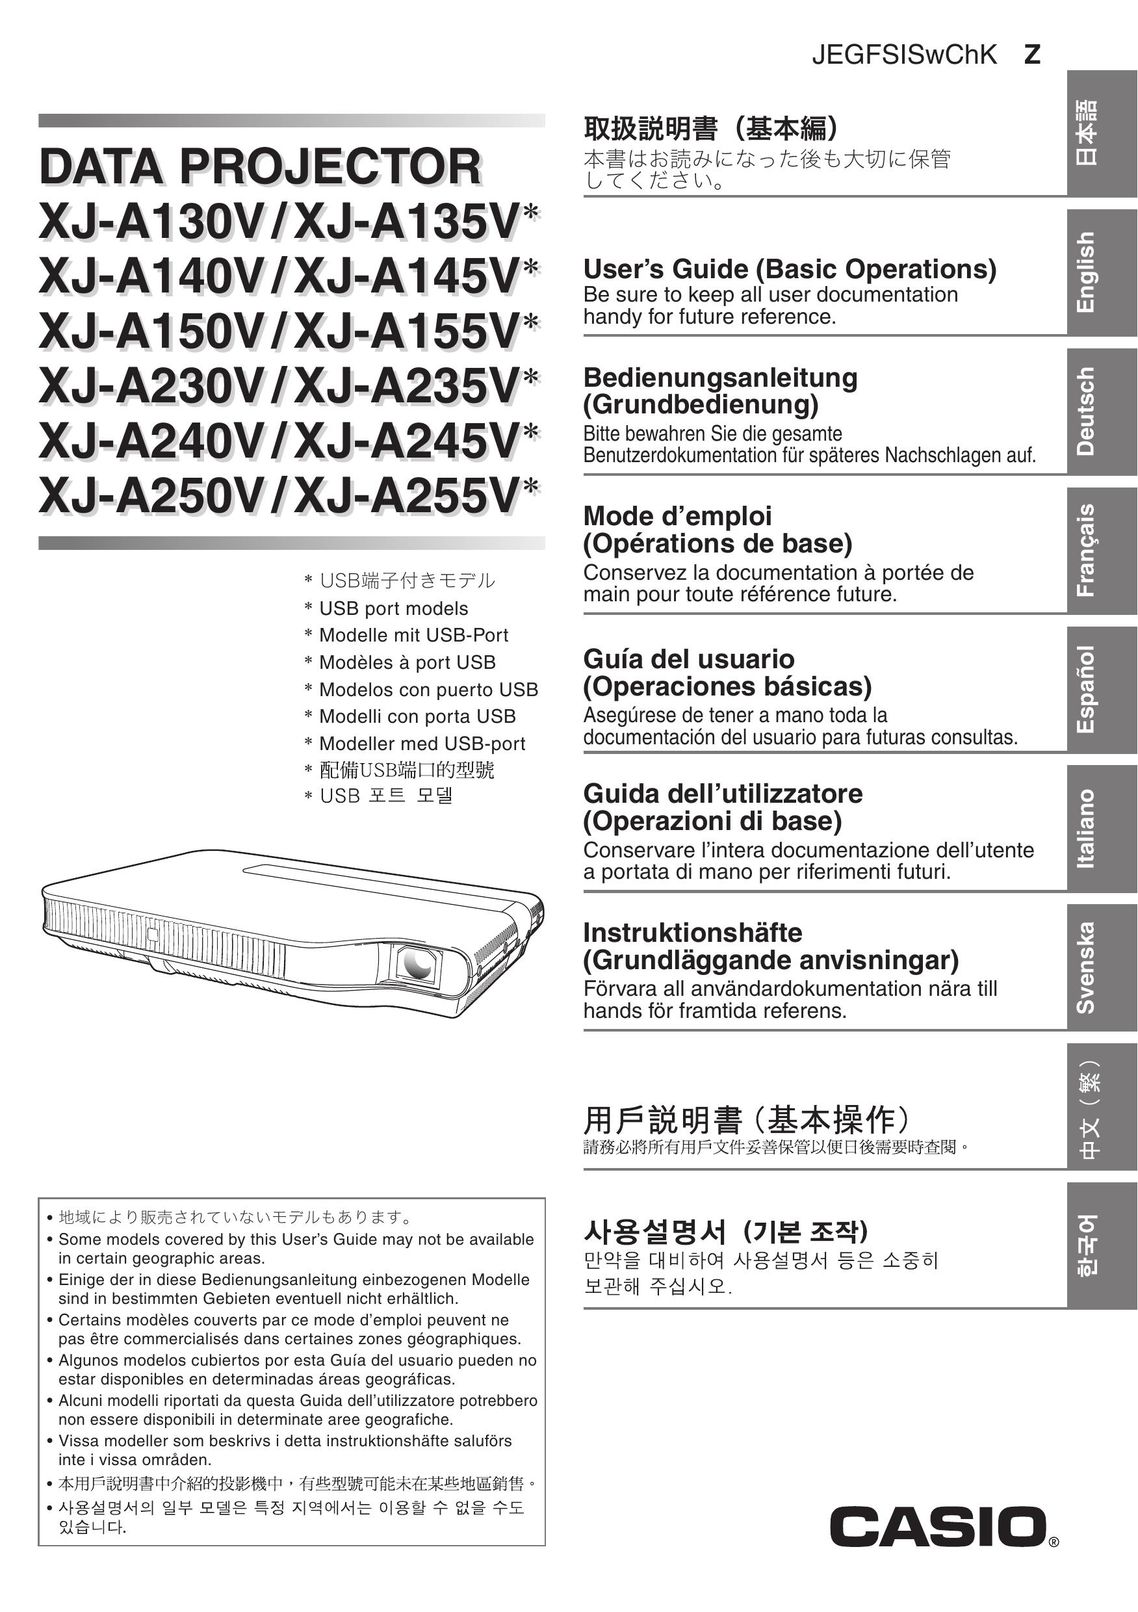 Casio XJ-A230V/XJ-A235V* Projector User Manual